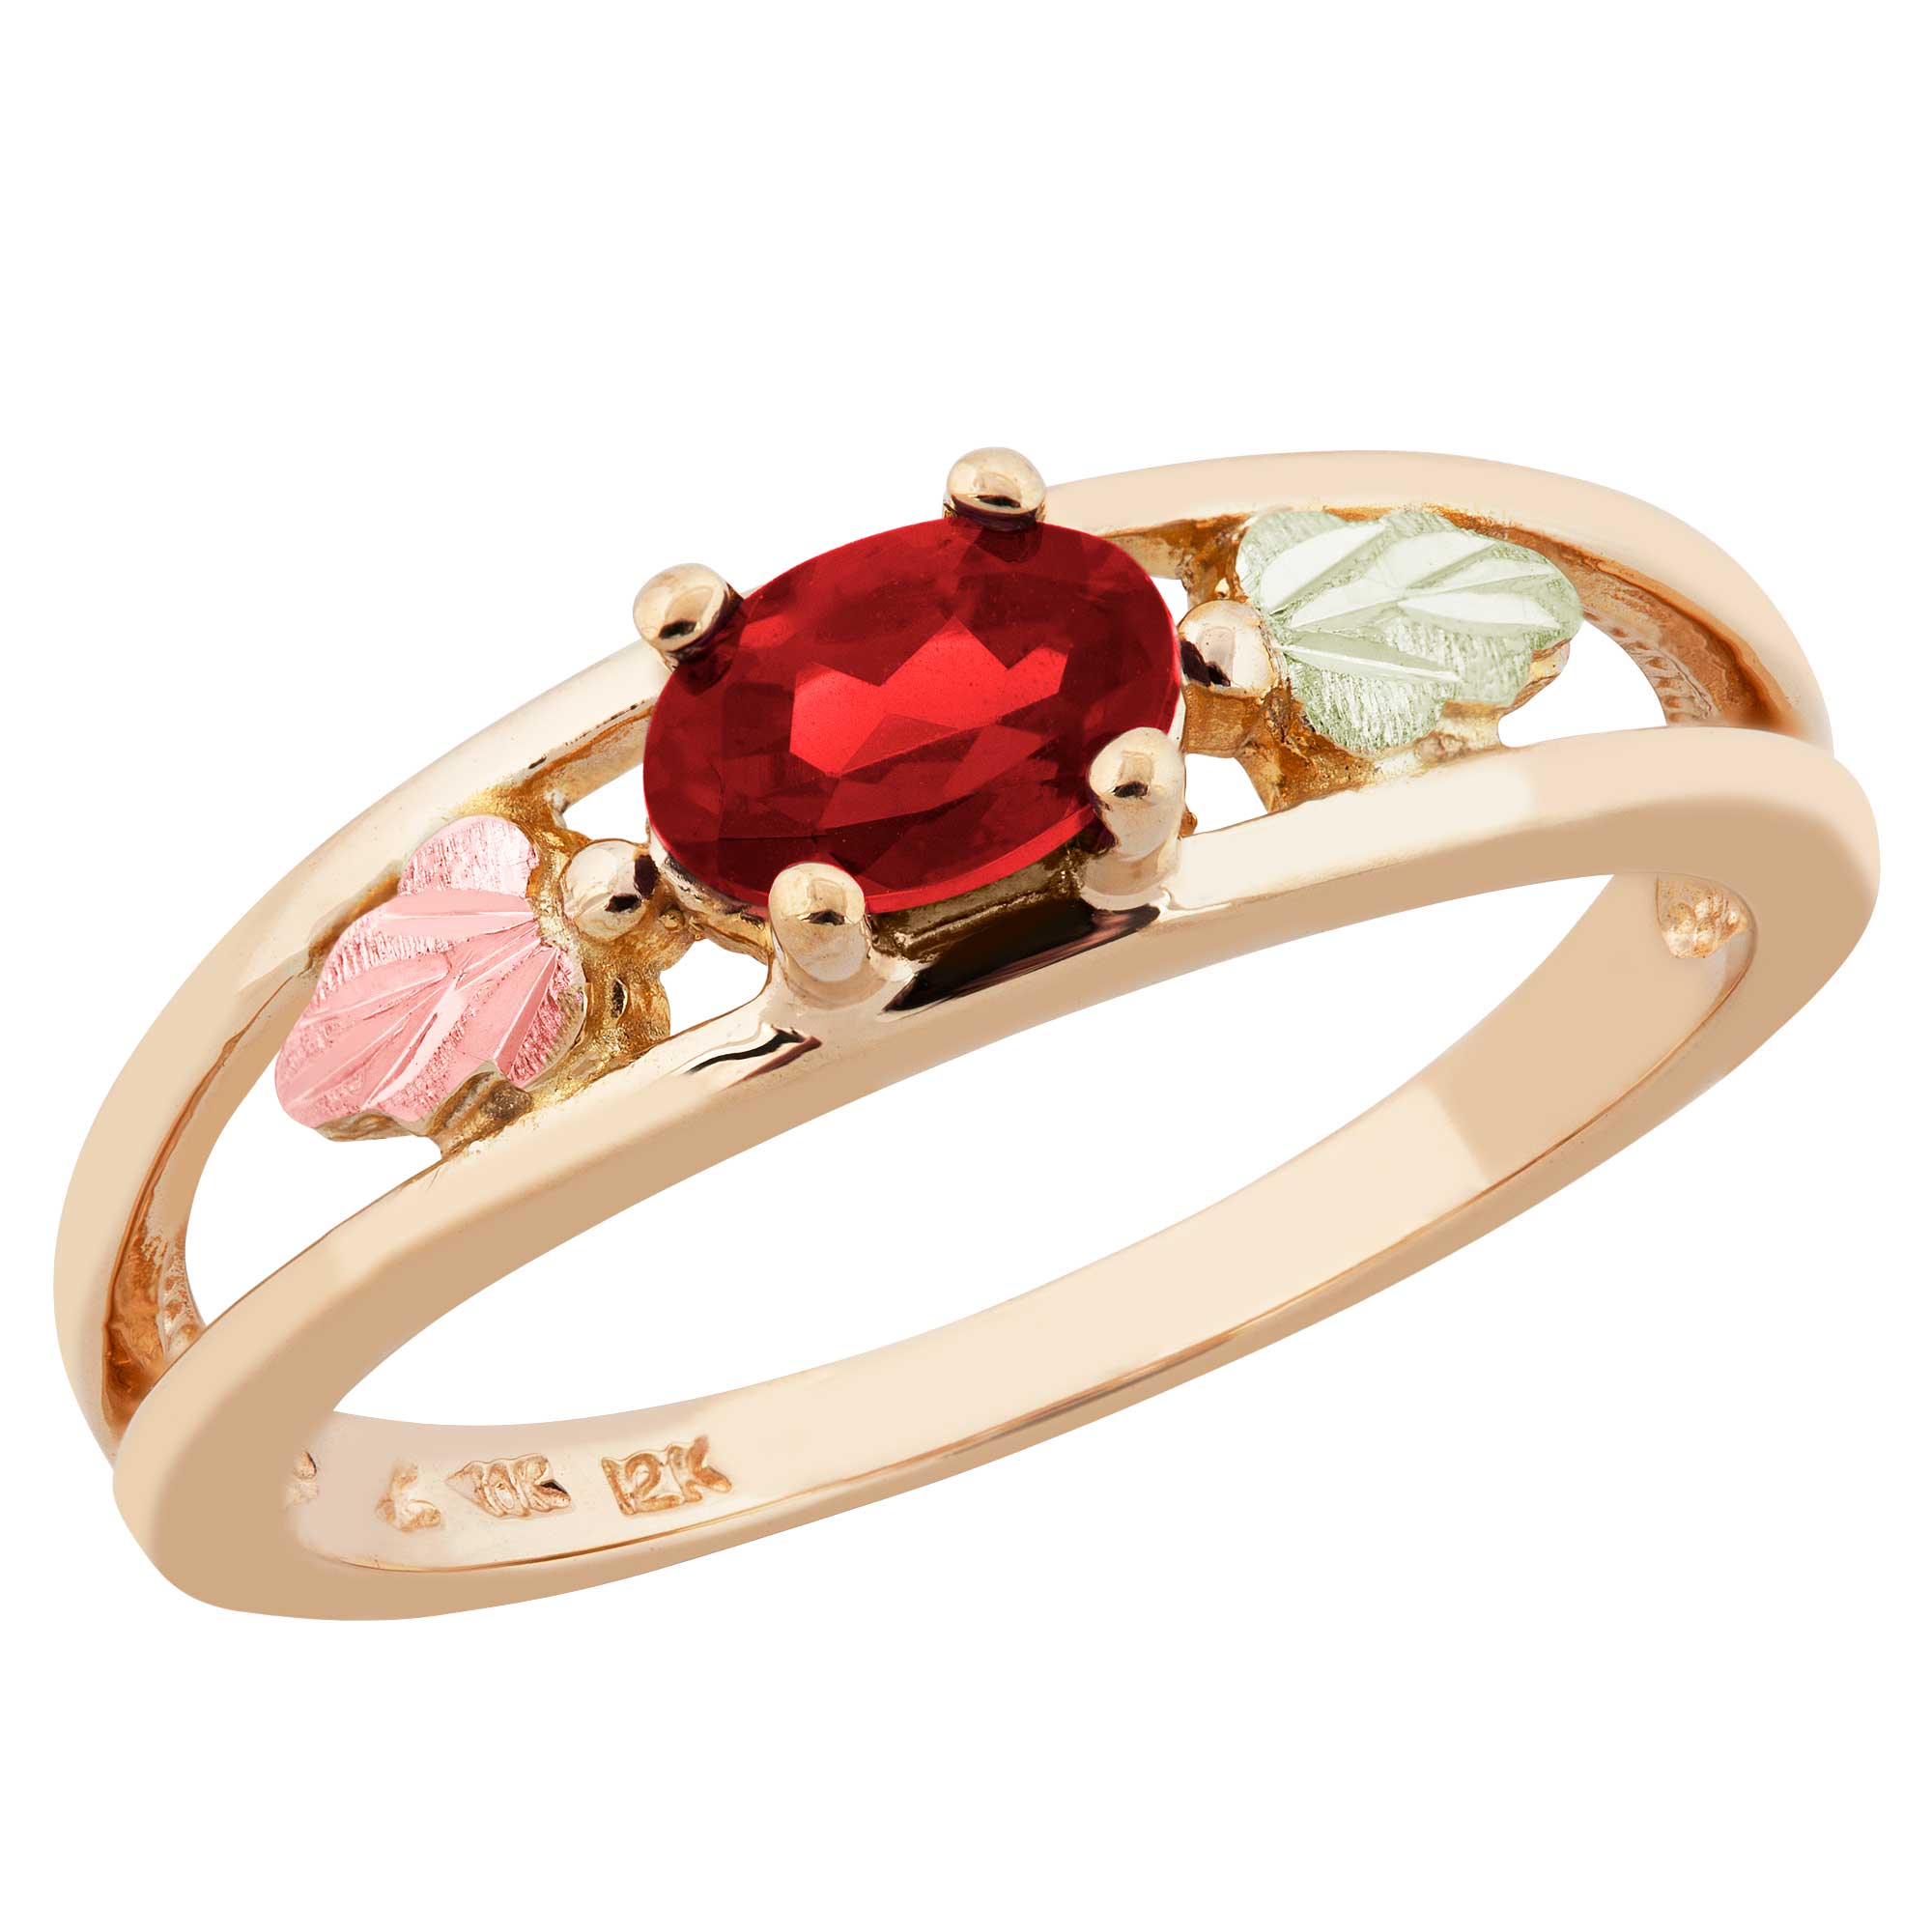 Ruby Gemstone Ring, 12k Green and Rose Gold Black Hills Gold Motif